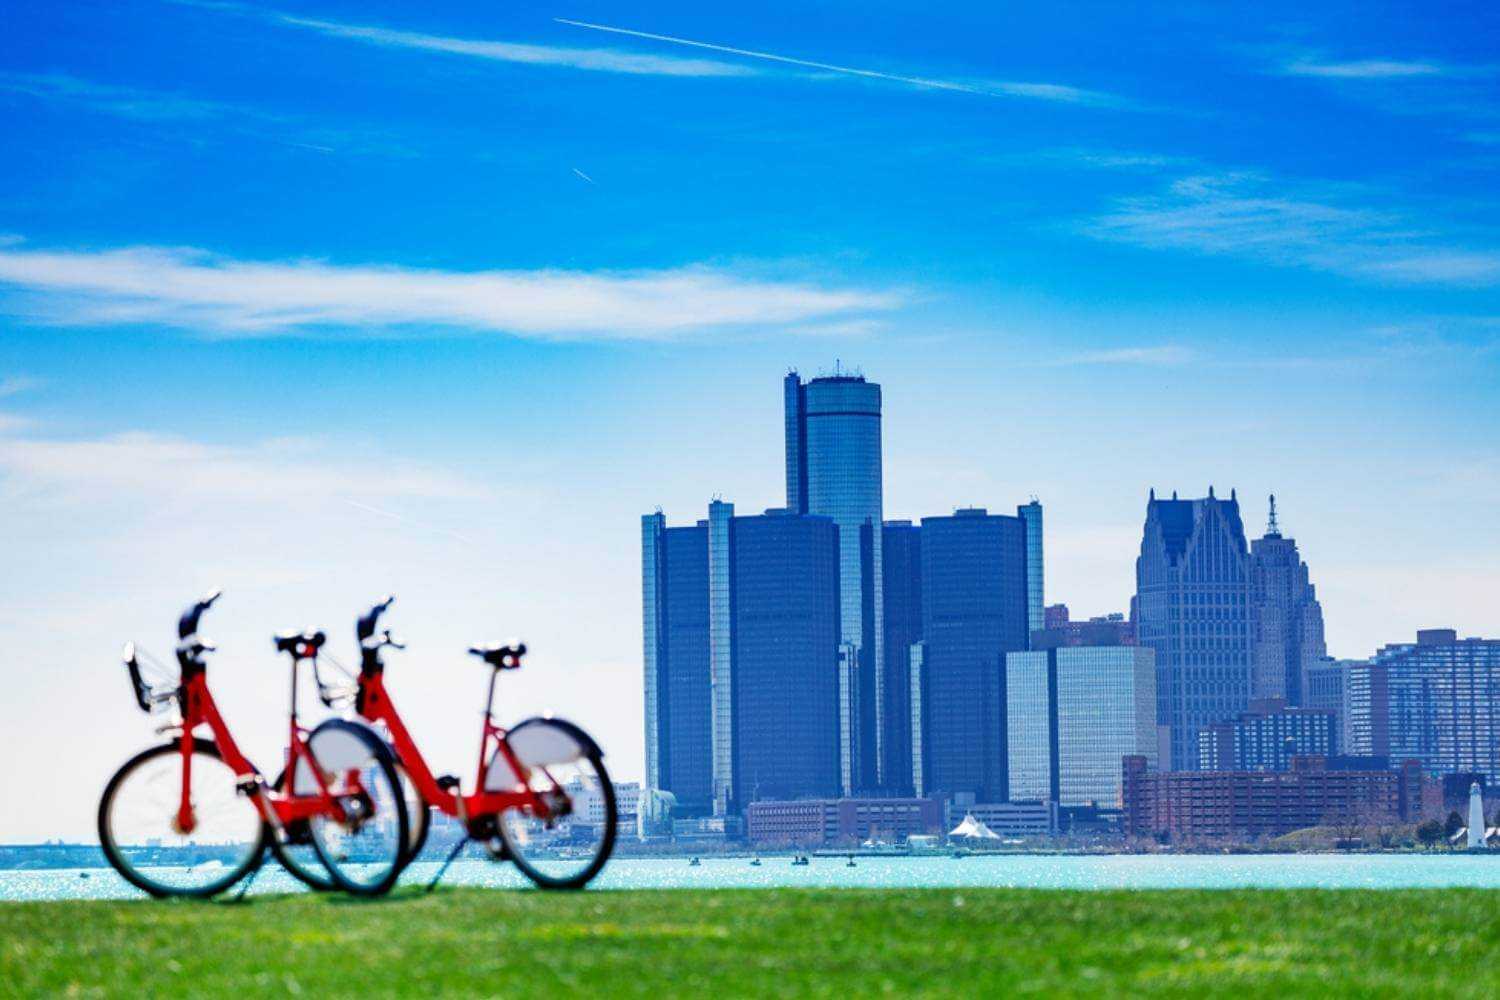 Detroit Dog Park City Skyline with Bikes